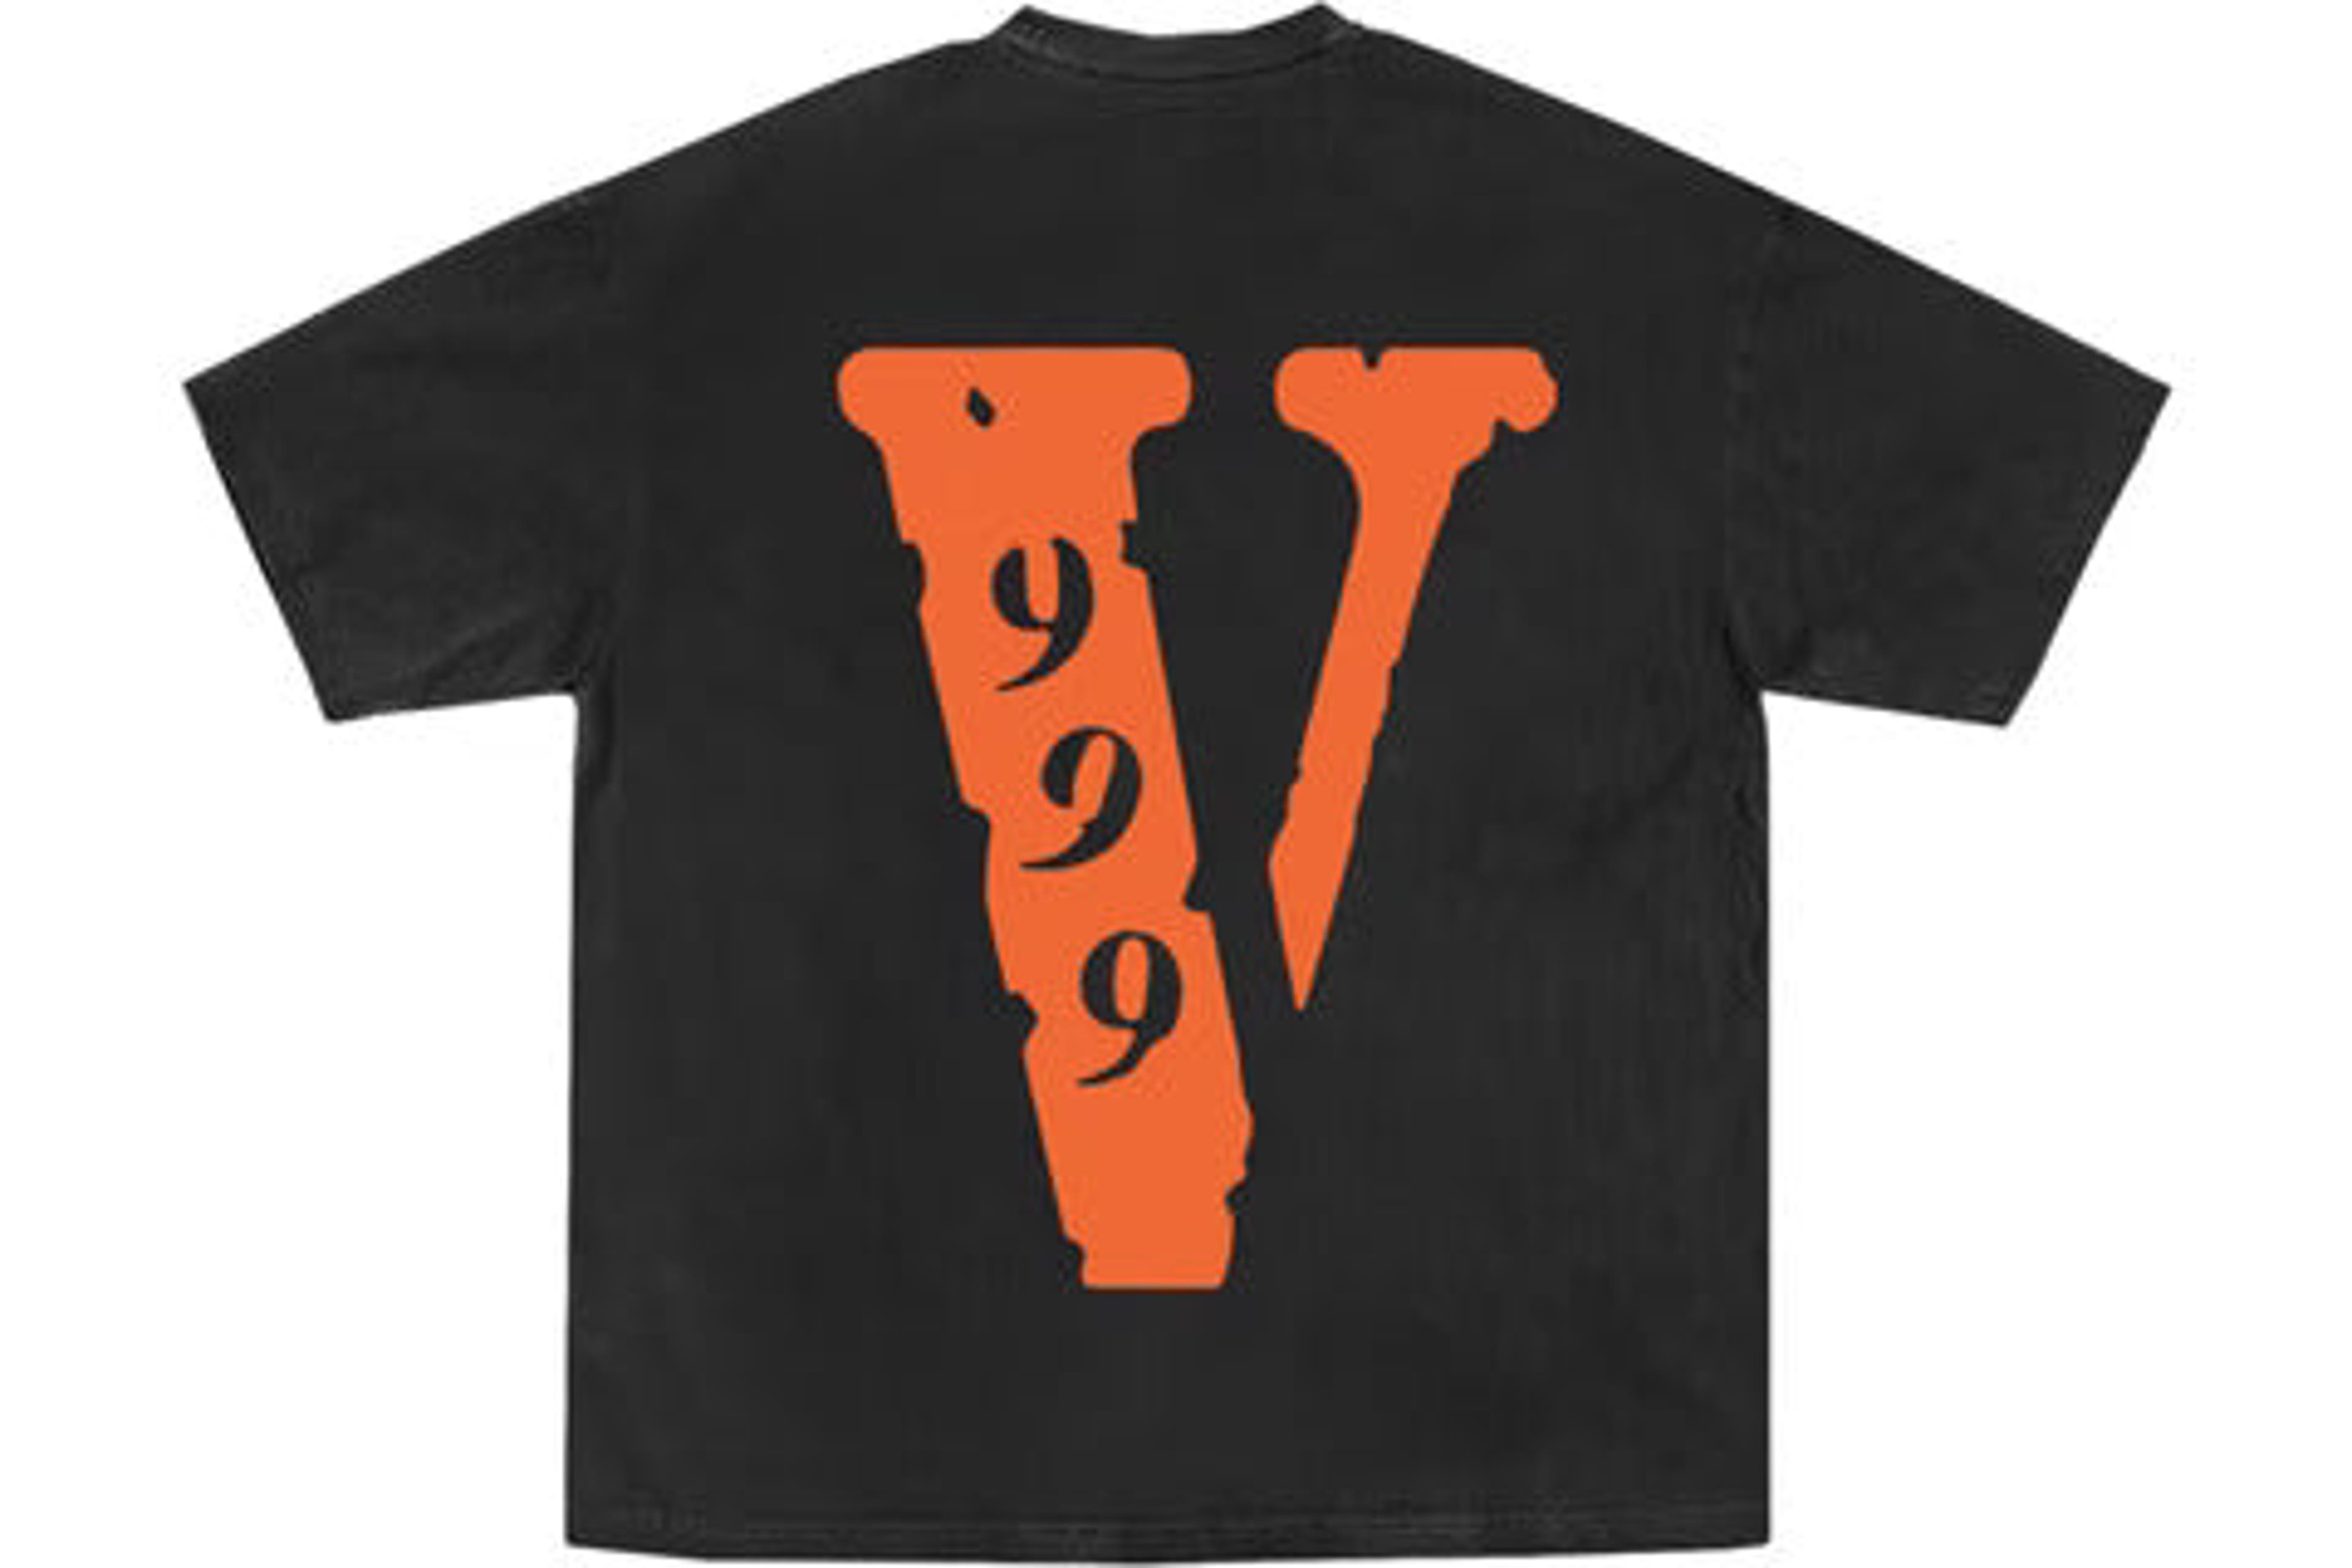 Alternate View 1 of Juice WRLD x Vlone 999 T-Shirt